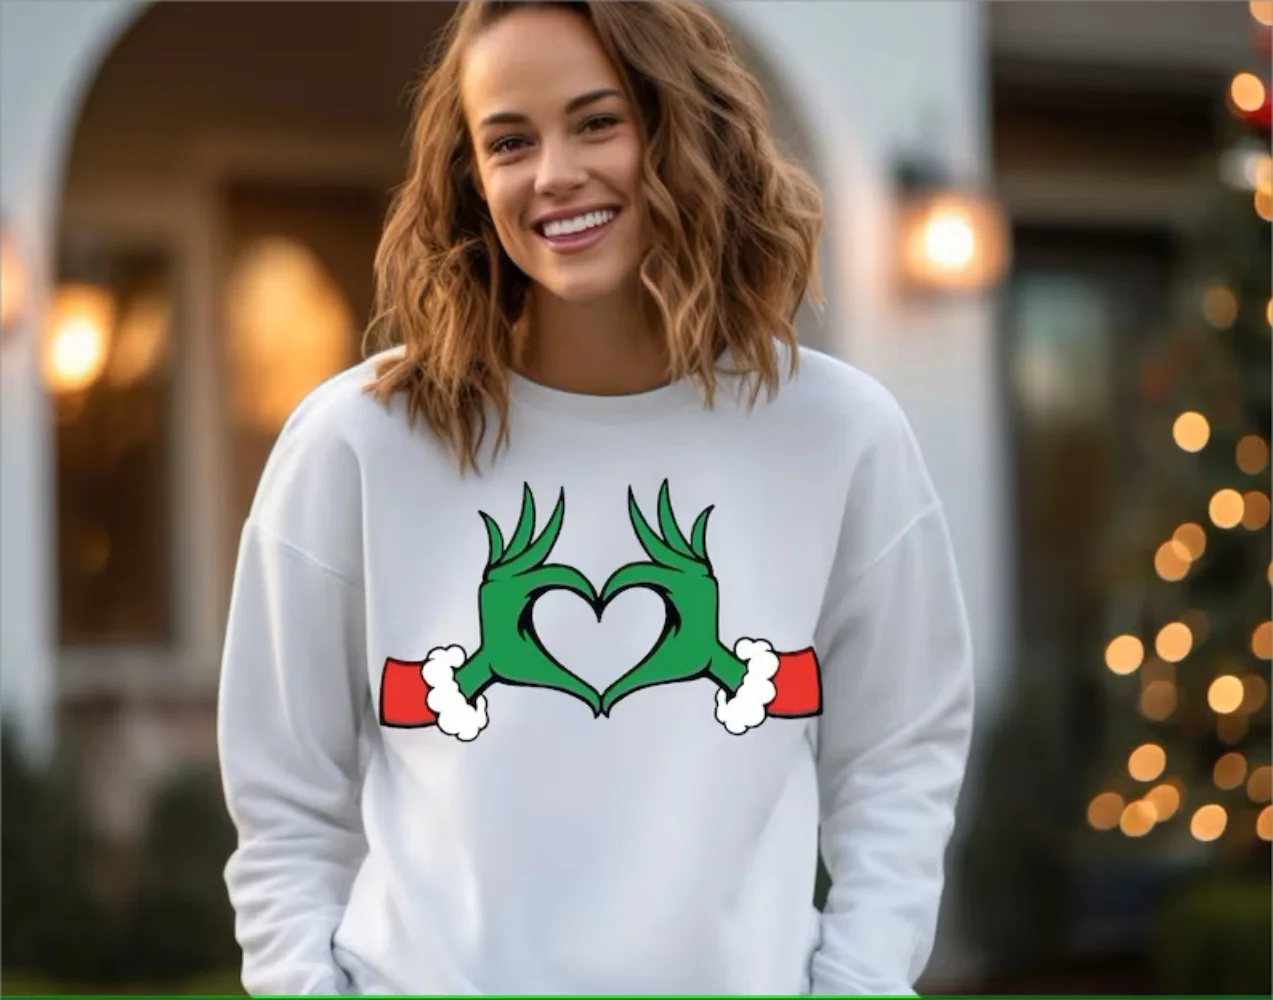 Trending Now Heart Hands Graphic Christmas Shirt Cute Funny Love Graphic Tees Matching Family Sweatshirt Xmas Holiday T-Shirt футболка женская kaftan xmas family р 40 42